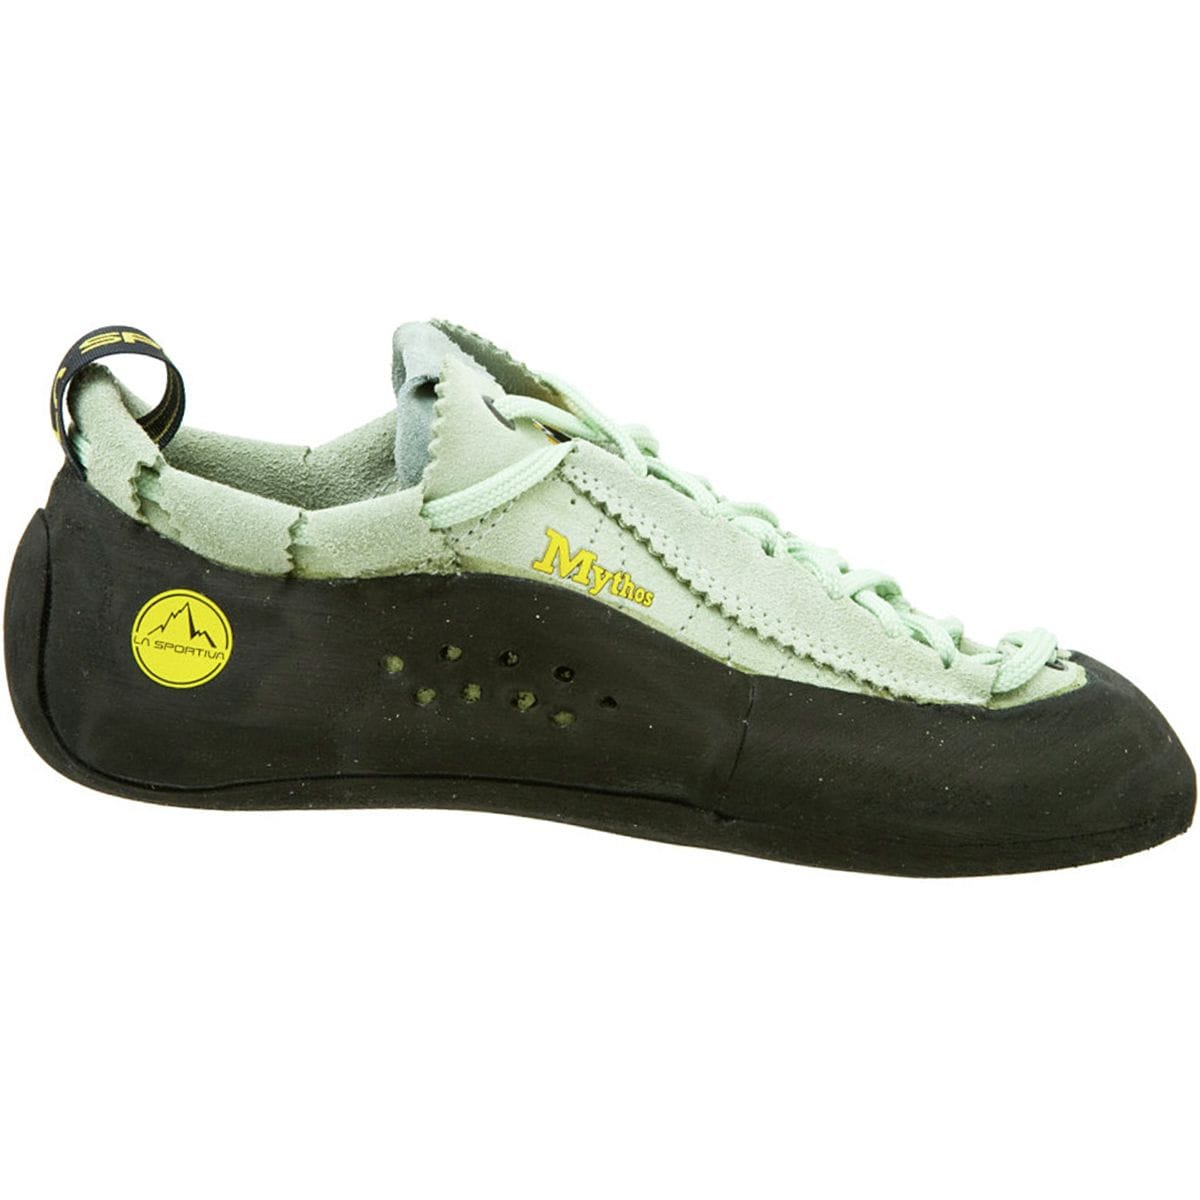 La shoe обувь. Vibram XS grip2. La Sportiva Mythos 30th Anniversary. Стельки la Sportiva. Polo Climb обувь.